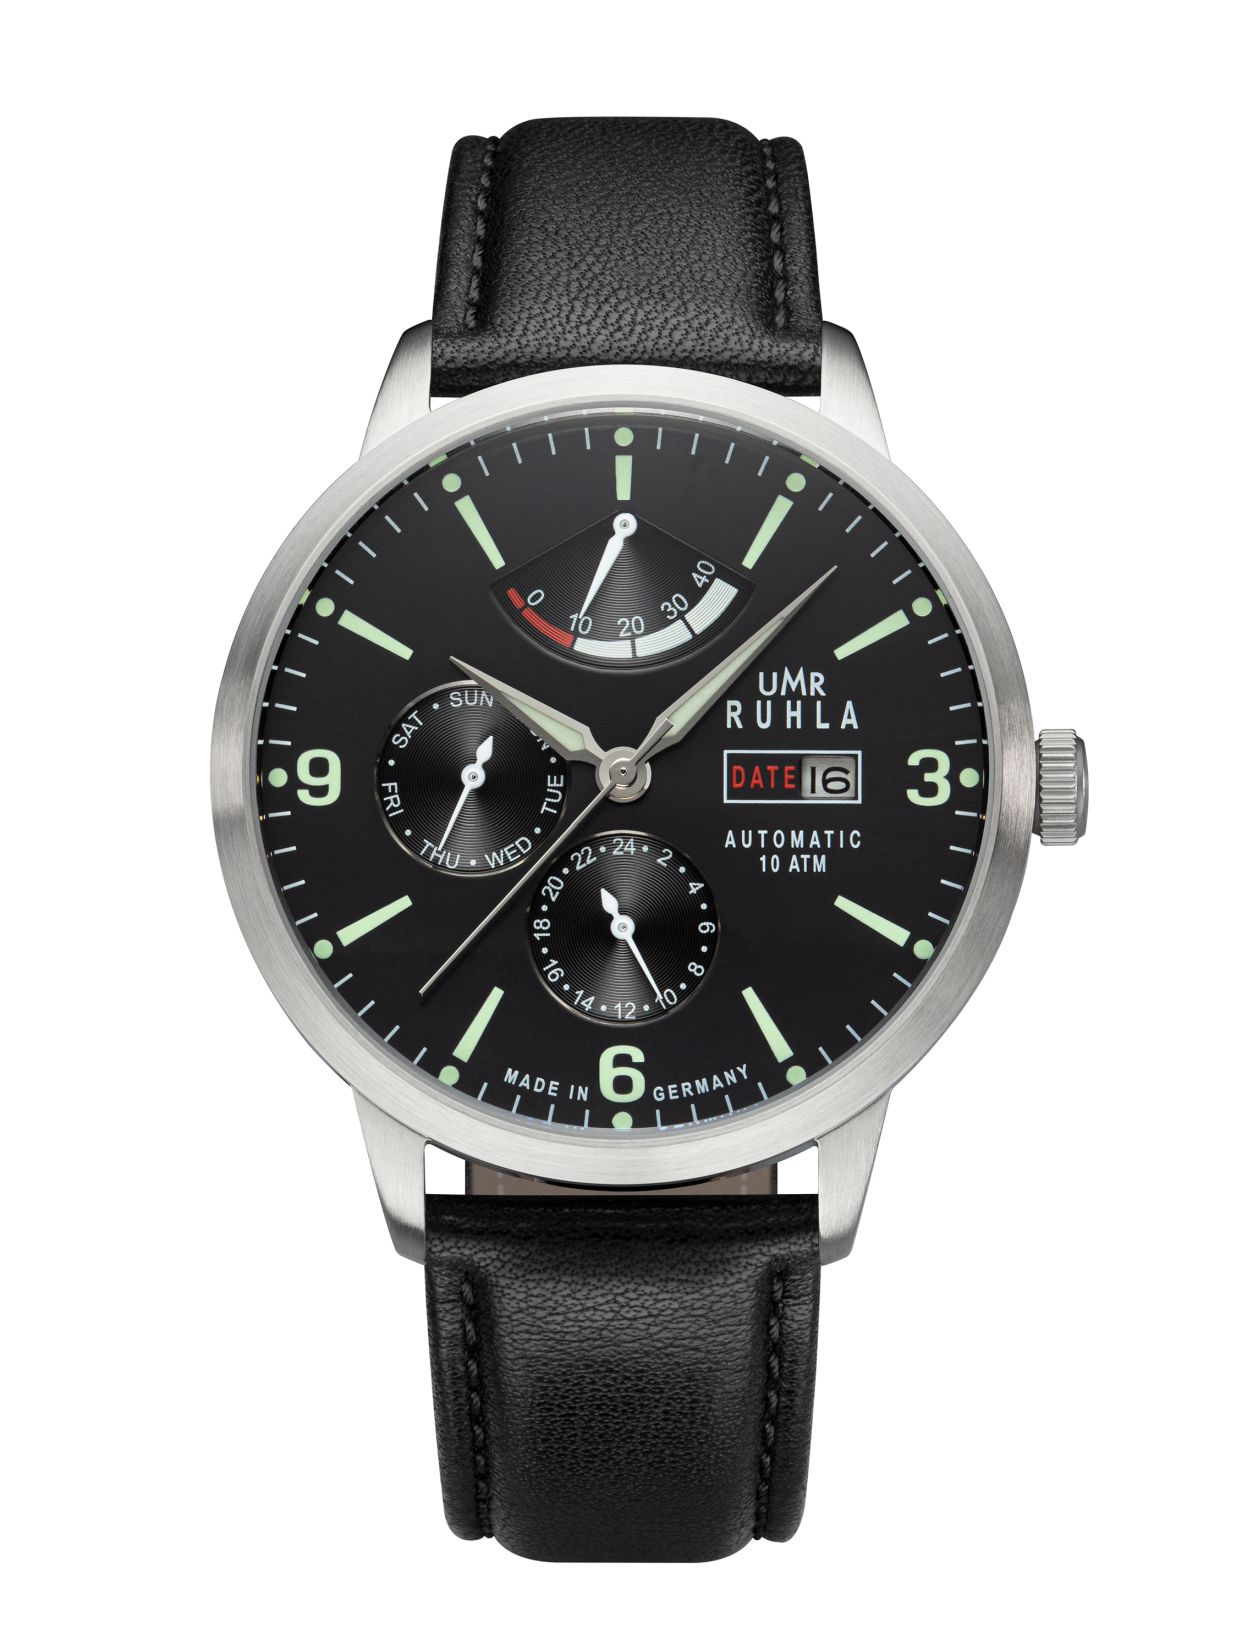 Uhren Manufaktur Ruhla - Automatisch horloge met gangreserve - Zwart - Made in Germany